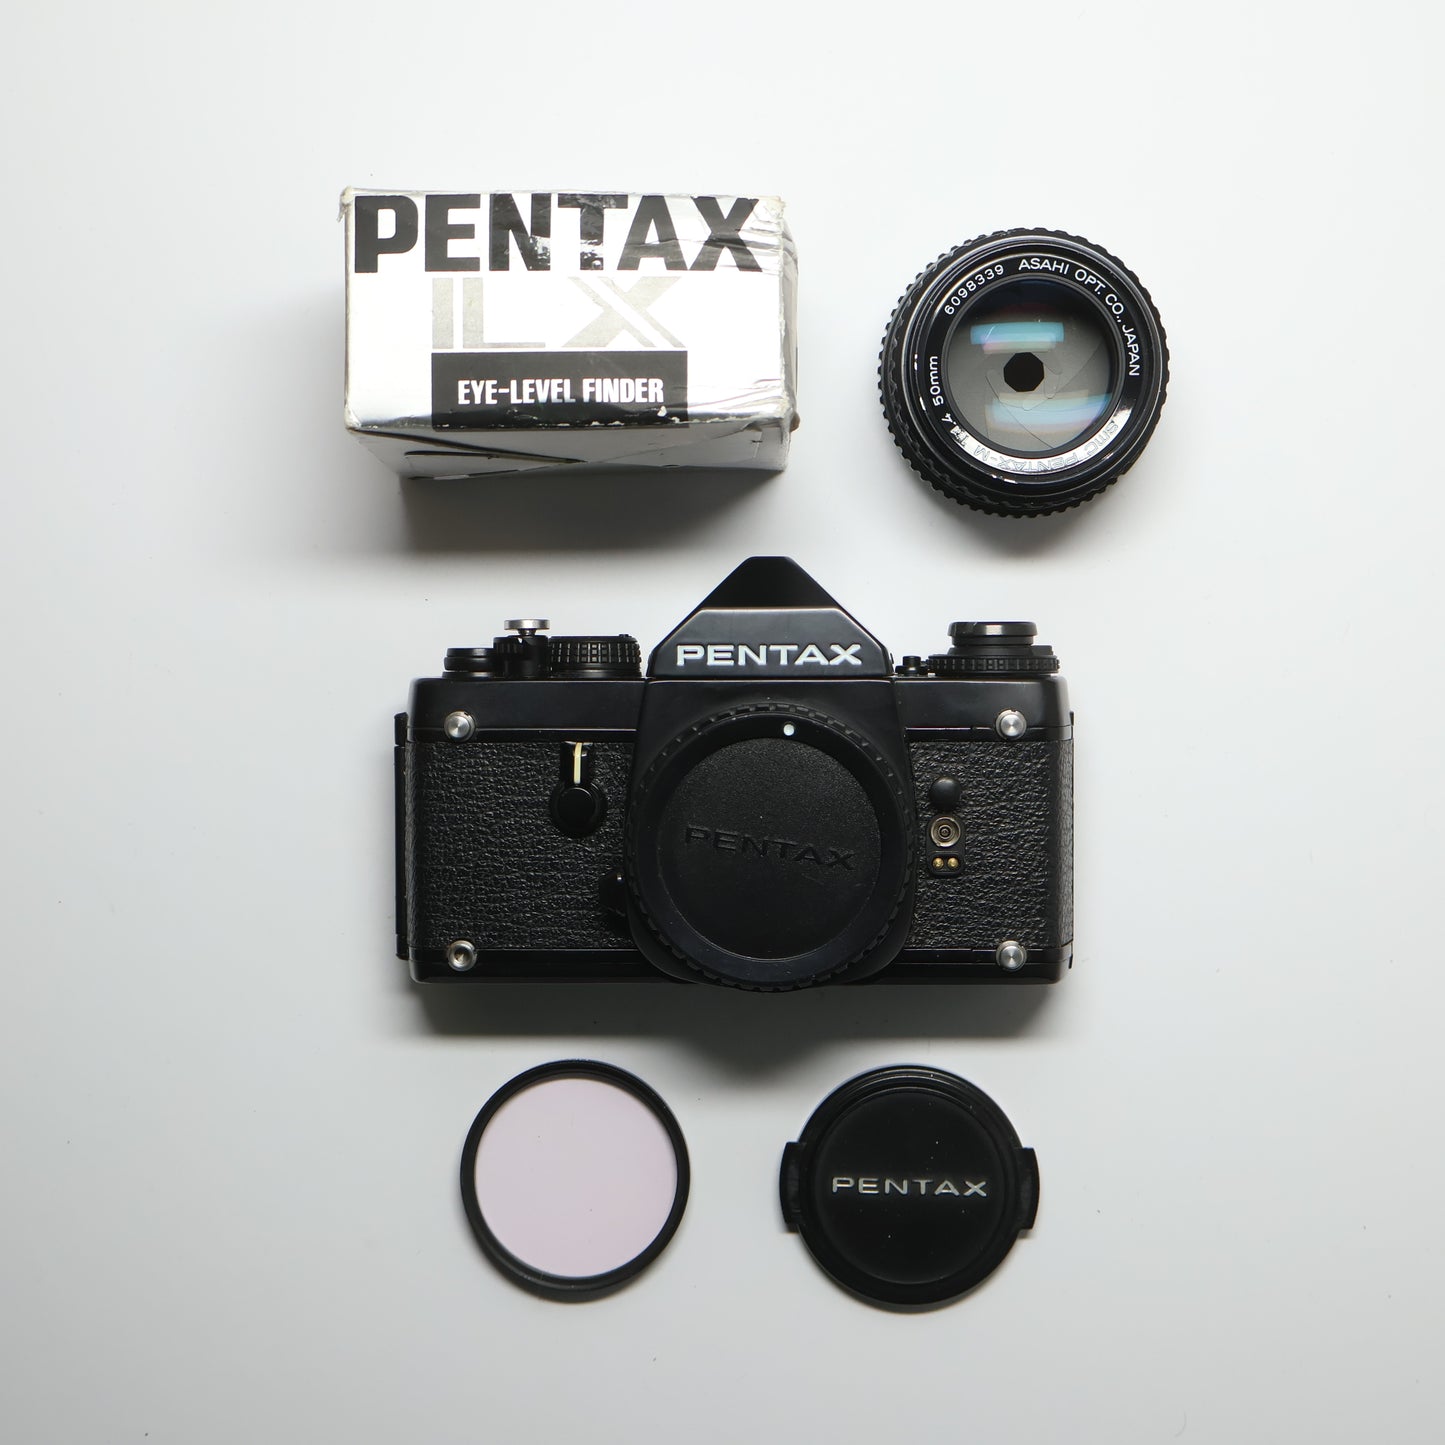 Pentax LX - Late Model